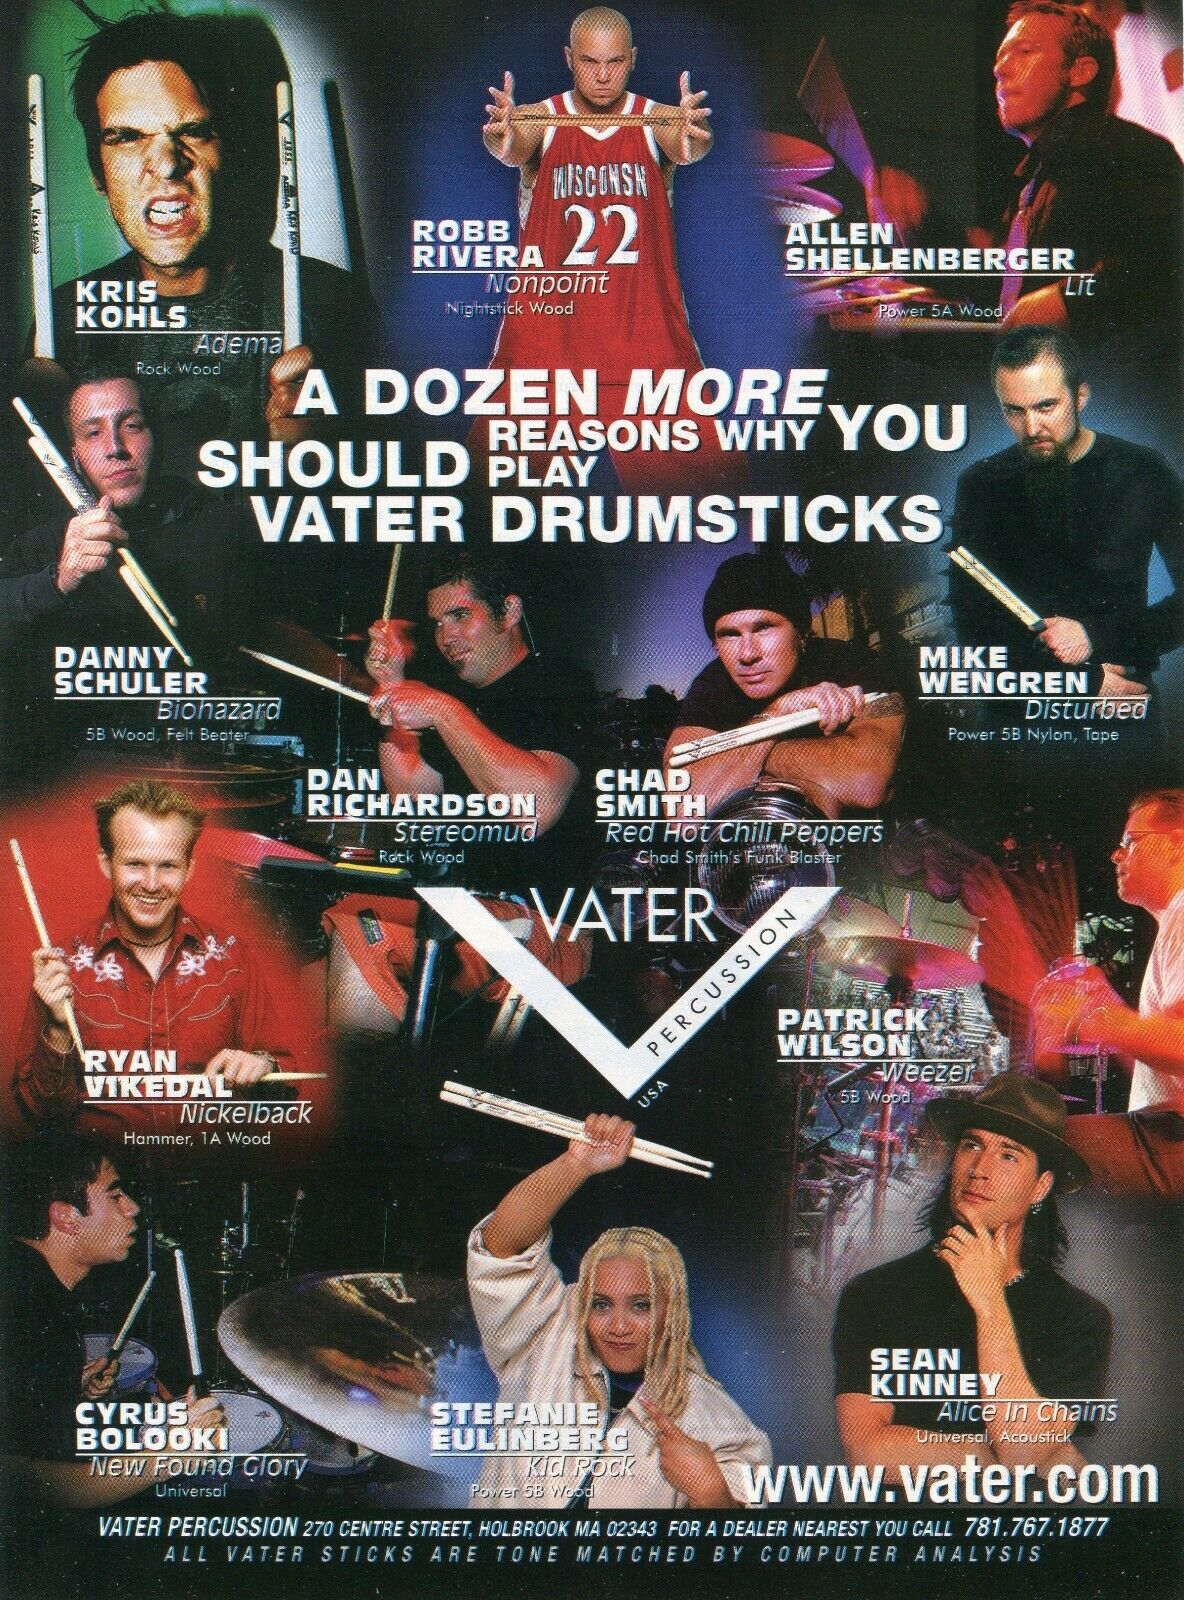 2002 Print Ad of Vater Drumsticks w Kris Kohls, Cyrus Bolooki, Patrick Wilson